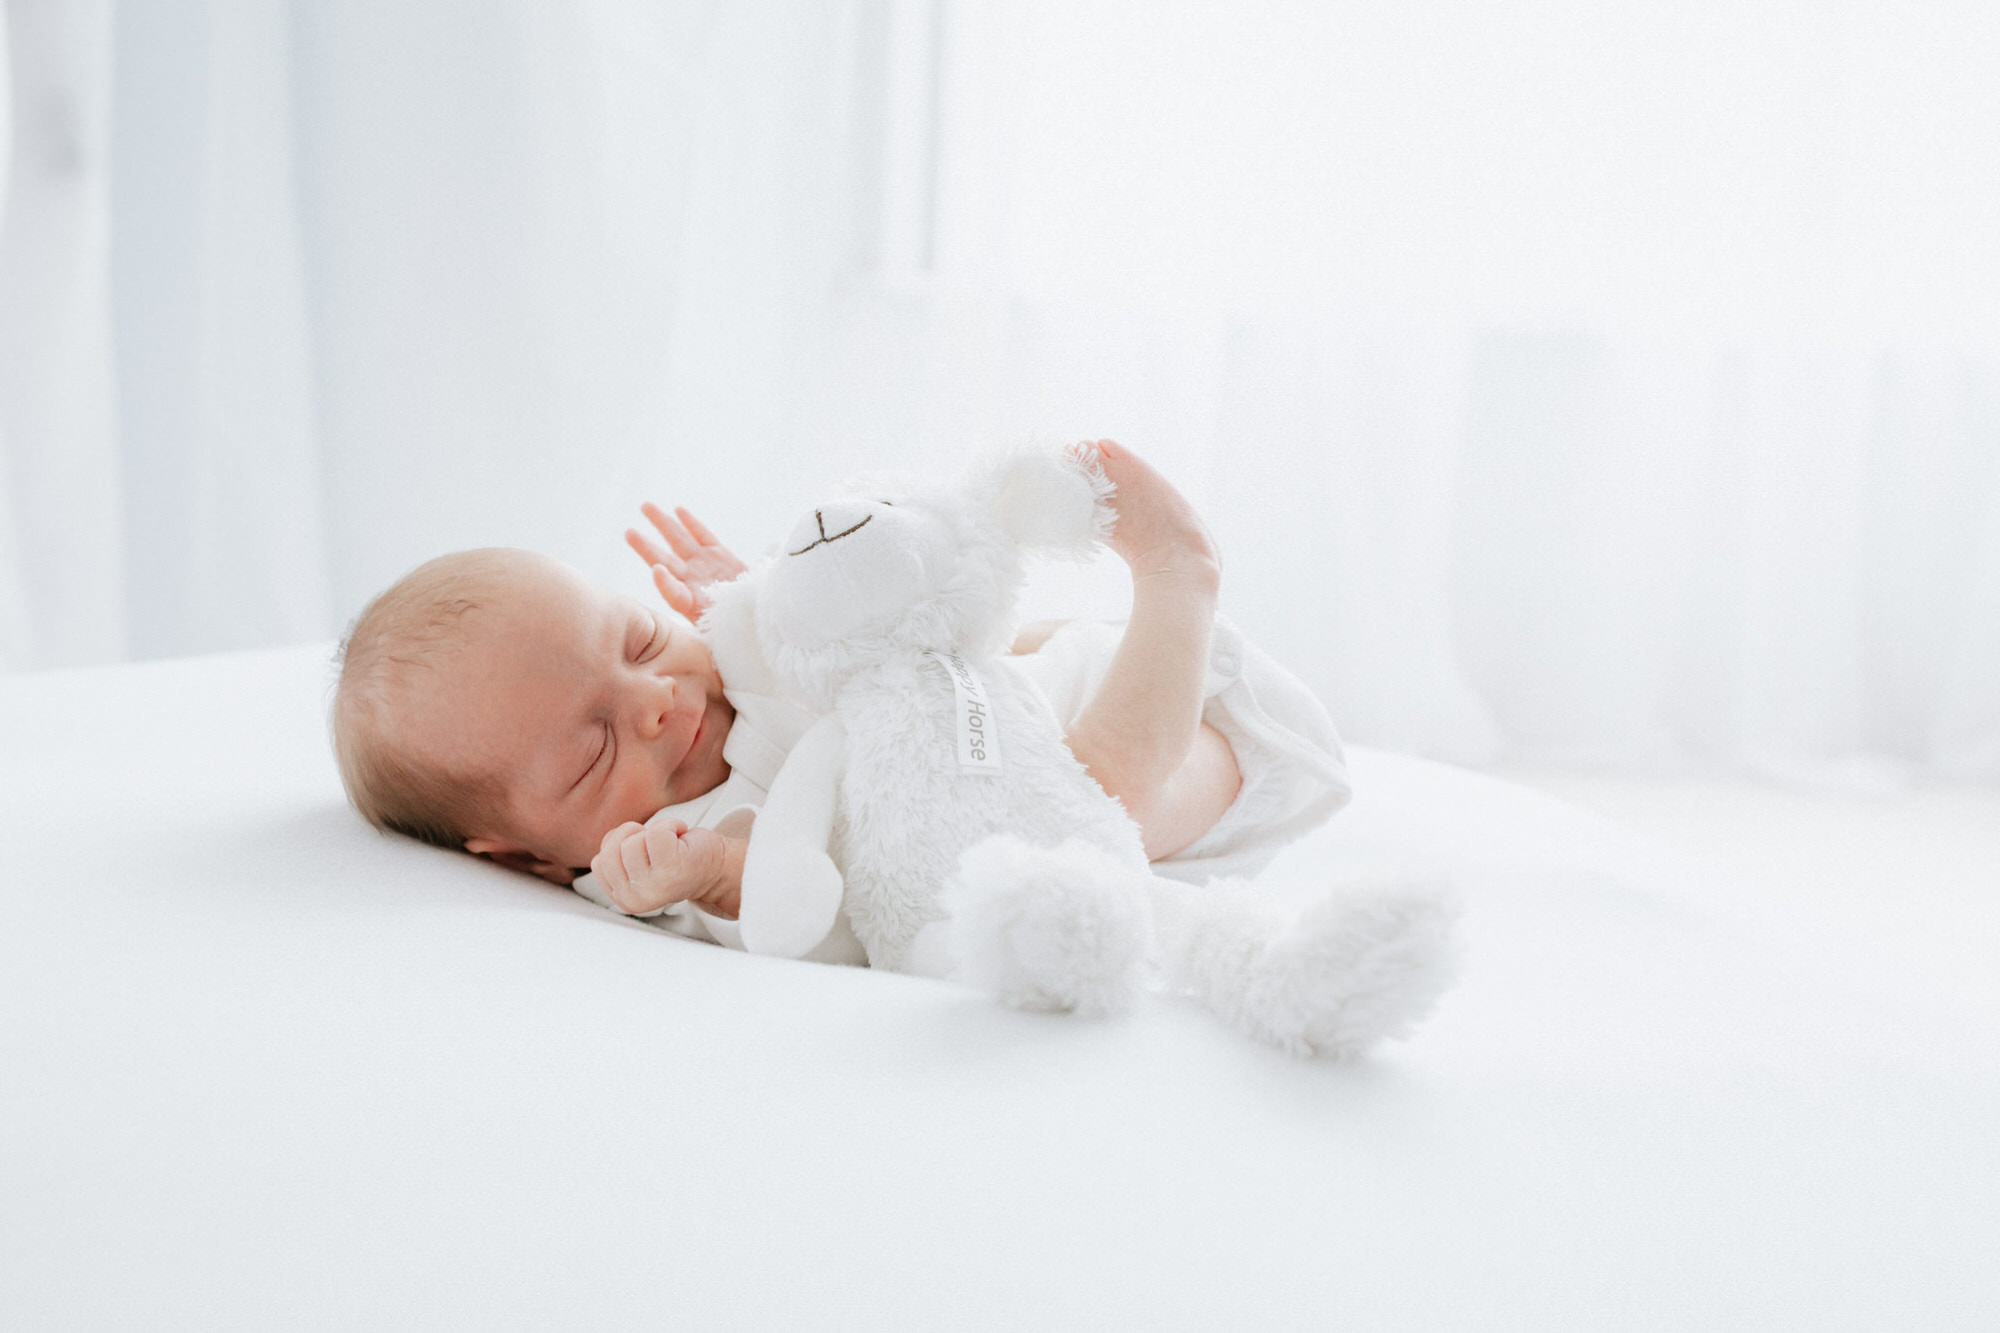 newborn baby cuddling teddy dressed in white at their Kent newborn photoshoot in Bexley